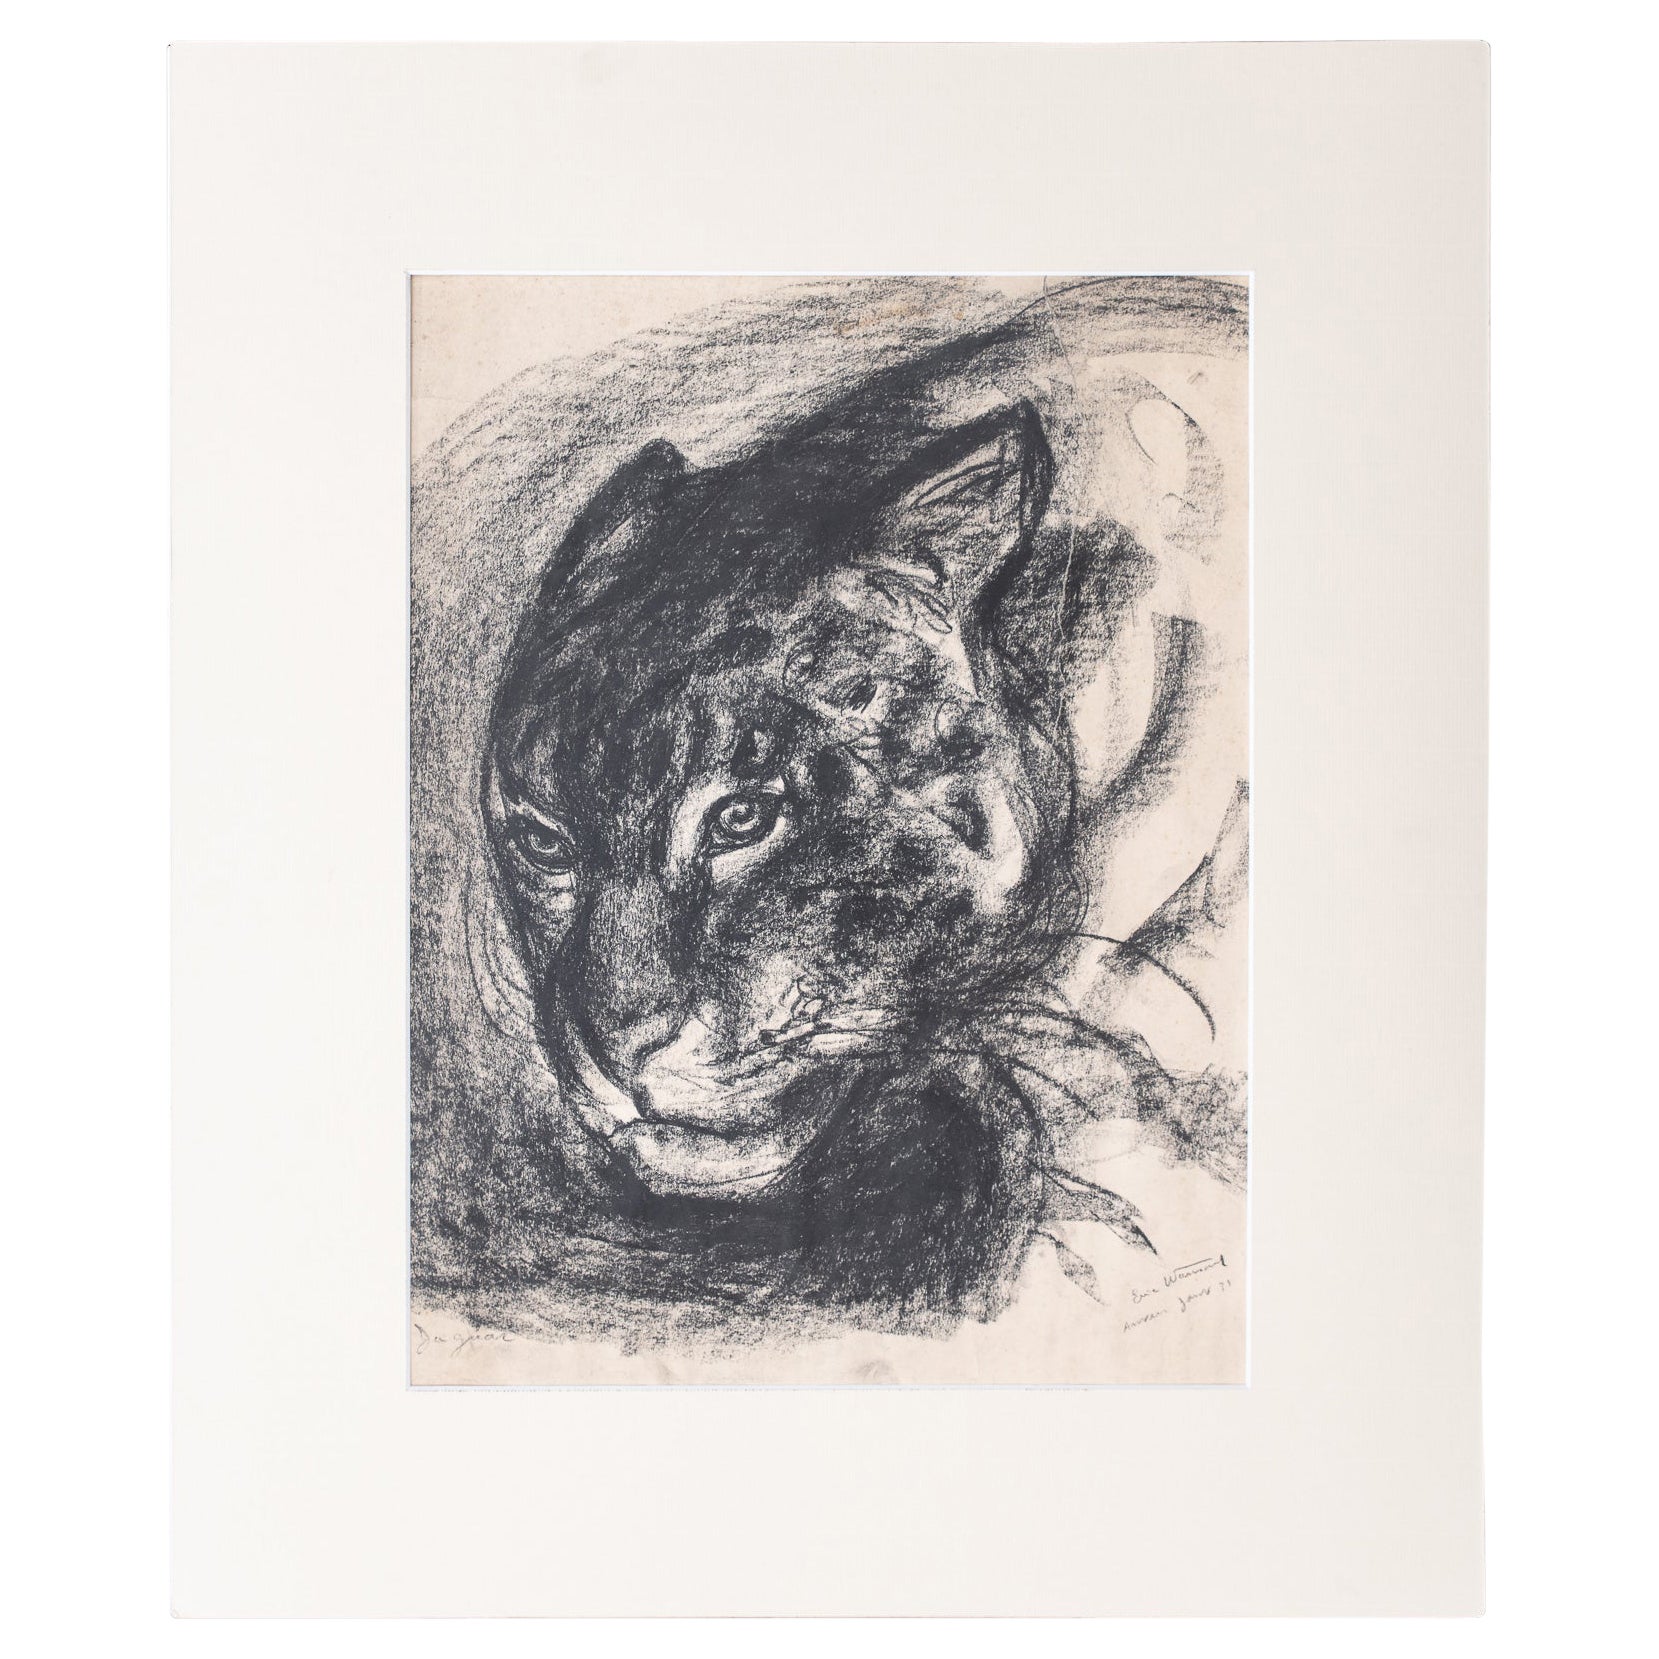 Eric Wansart 'Ukkel, 1899 - Elsene, 1976', Drawing of a Panther, Charcoal